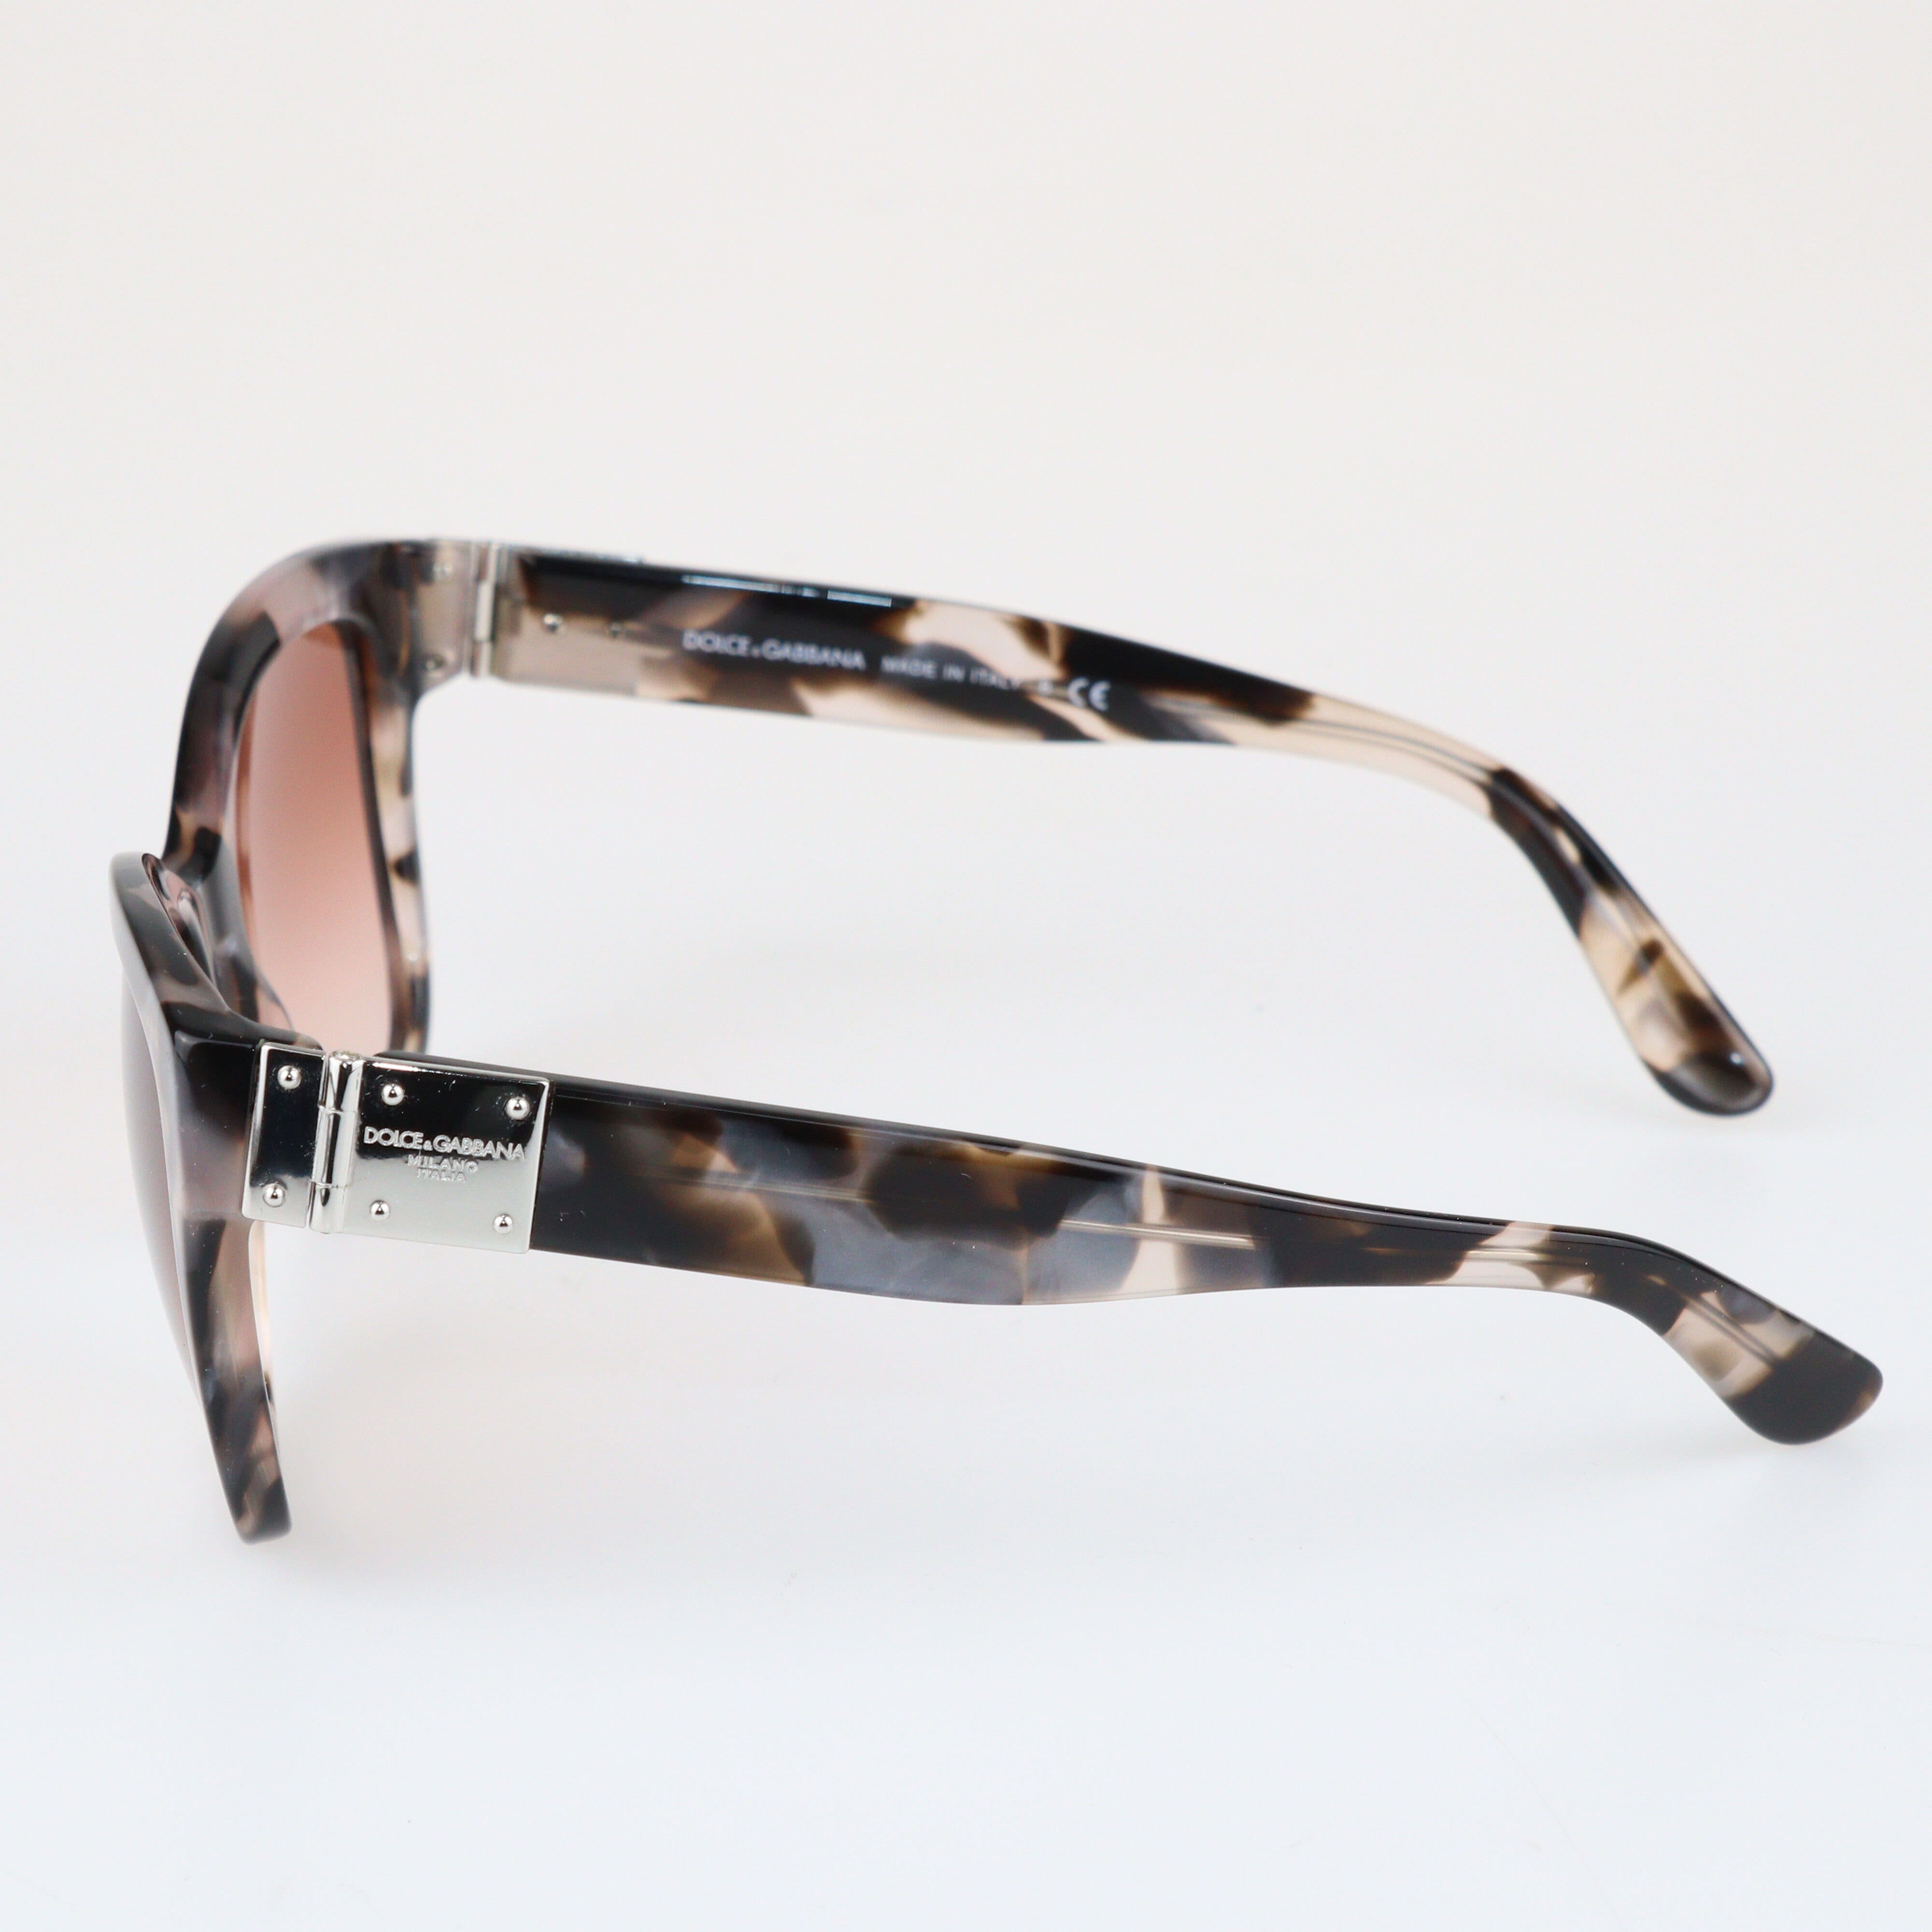 Brown/Pink Tortoiseshell Gradient DG 4309 Sunglasses Accessories Dolce and Gabbana 